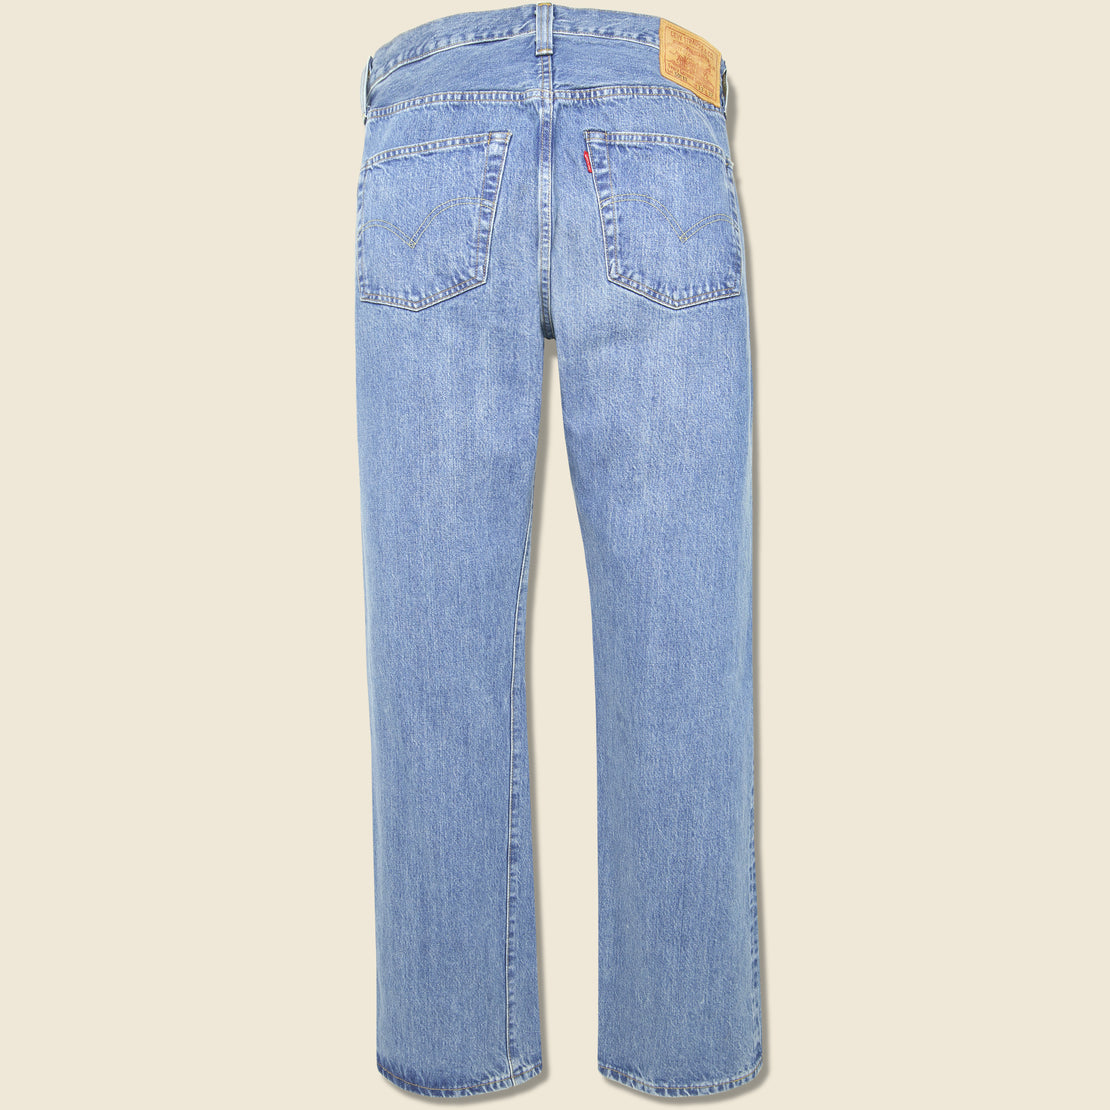 1947 501 Jean - Ecotopia - Levis Vintage Clothing - STAG Provisions - Pants - Denim